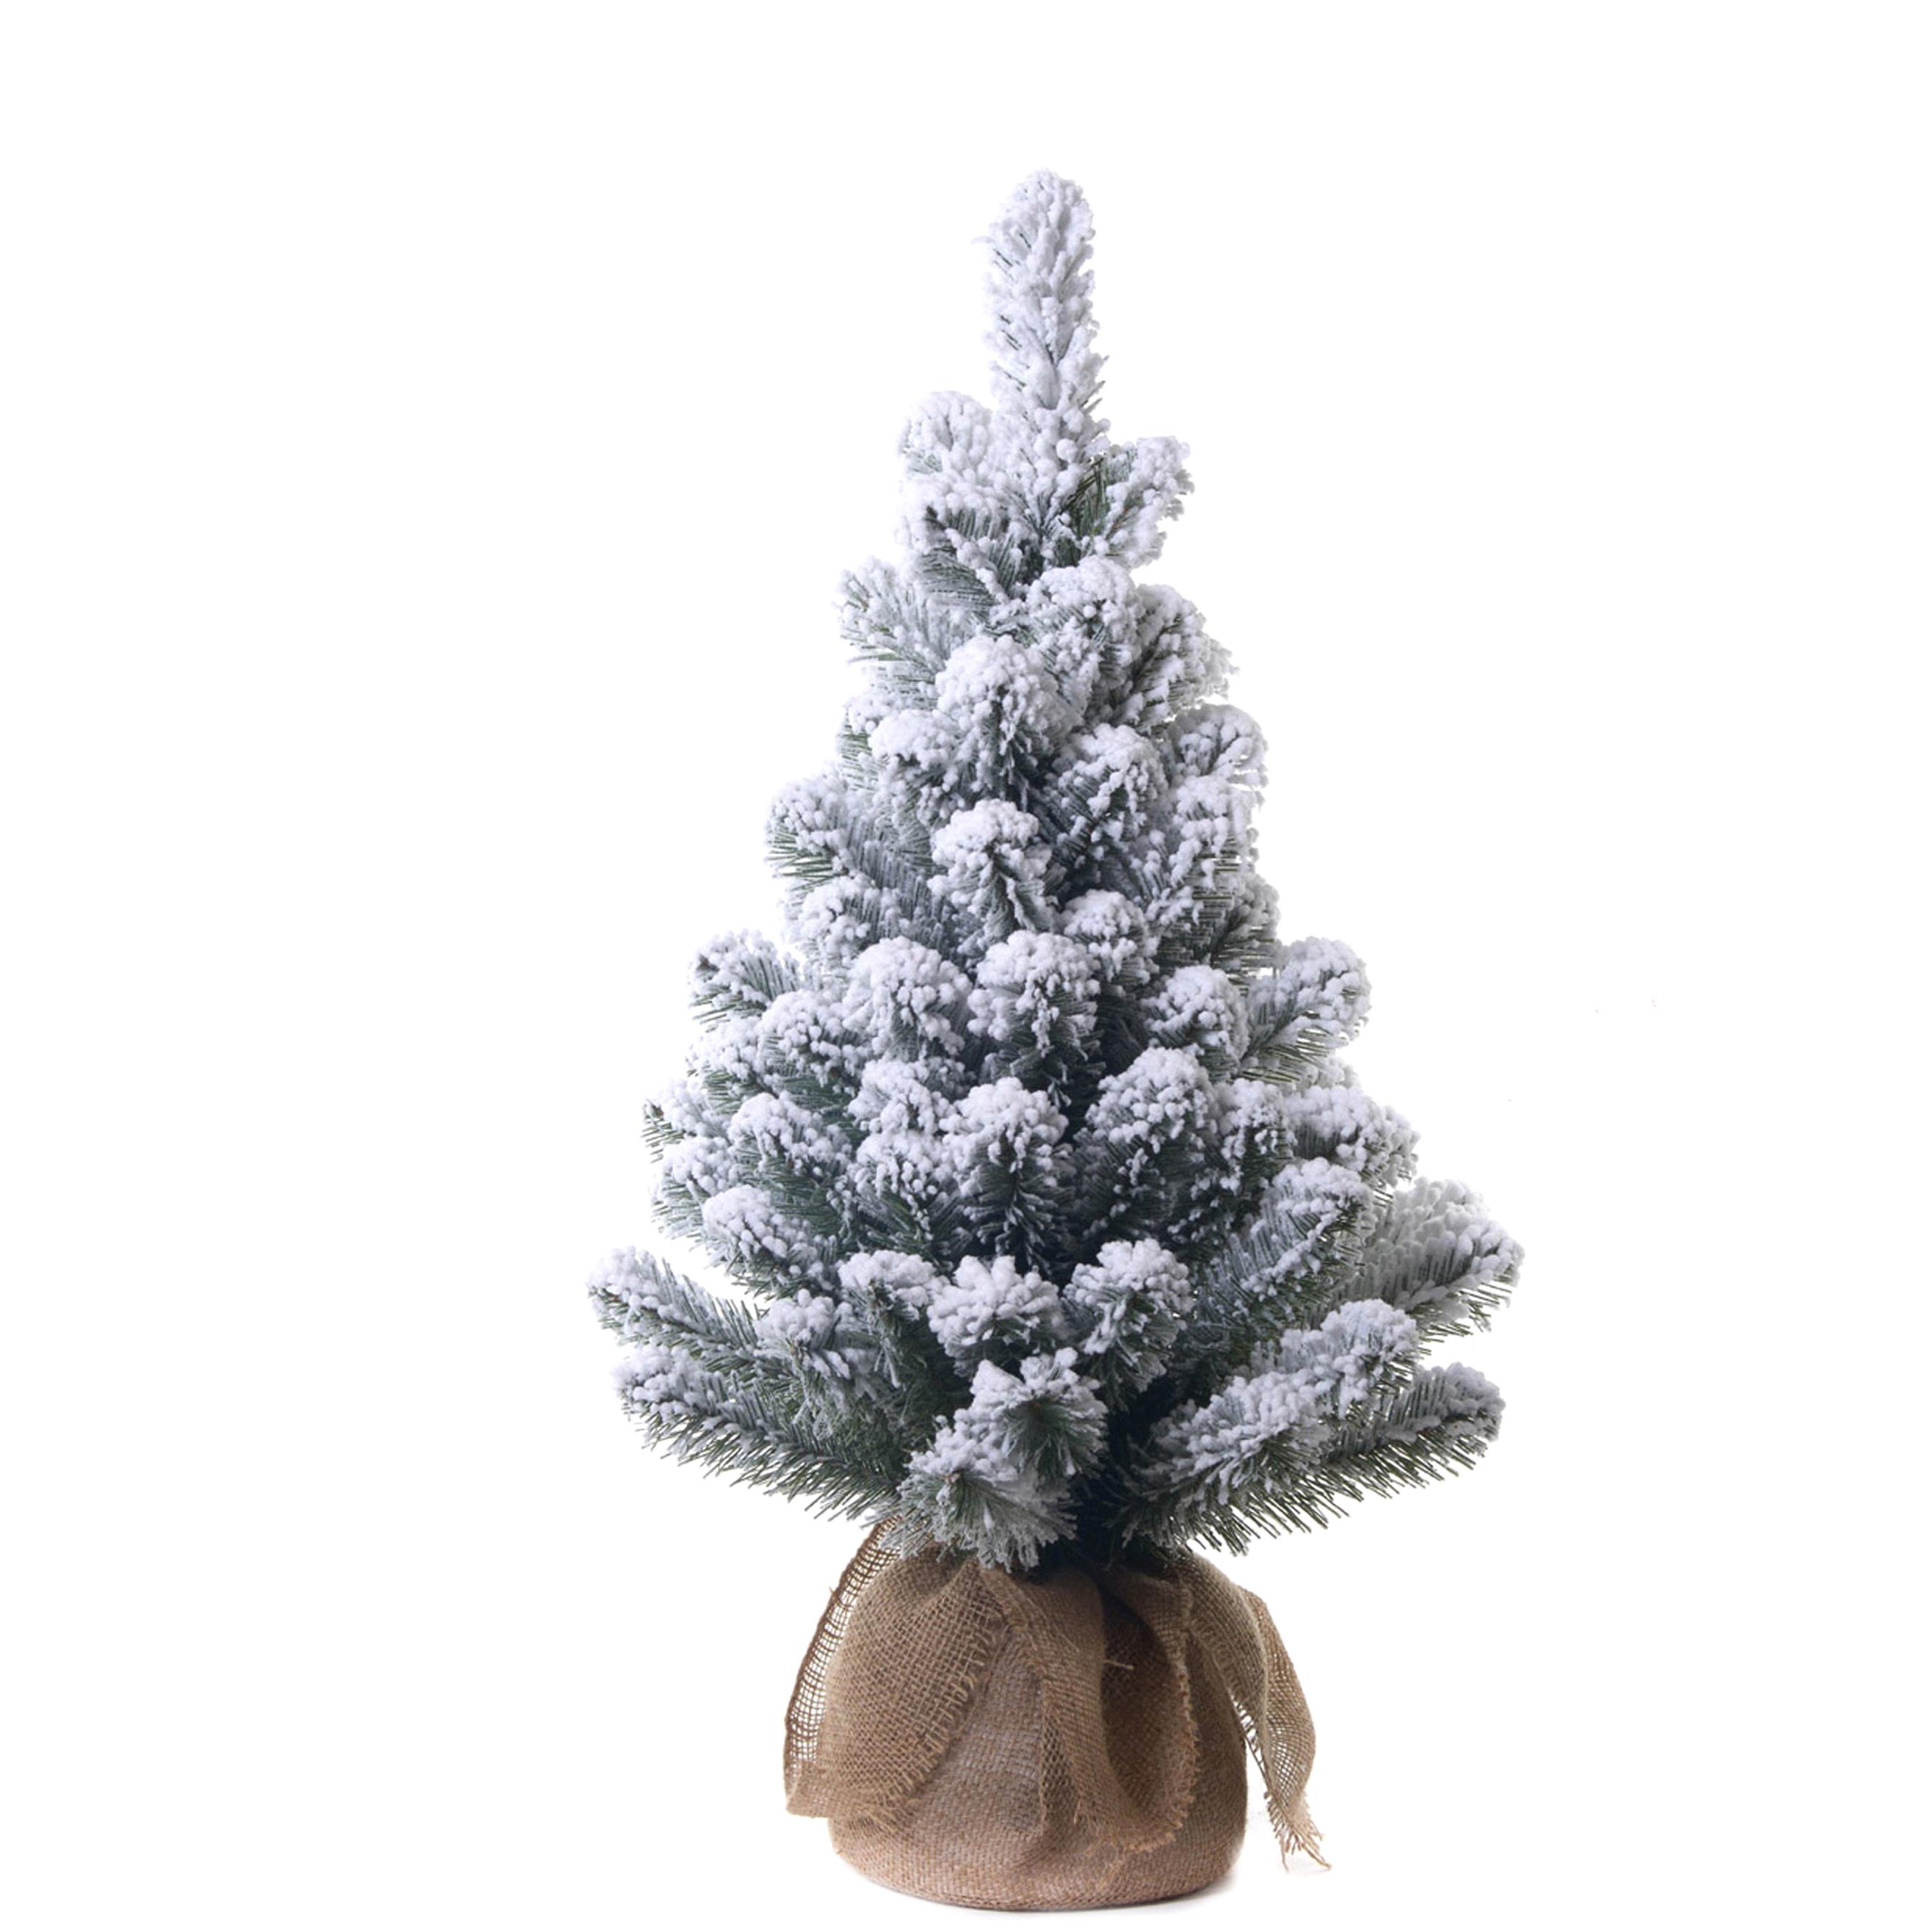 CHRISTMAS ITEMS, TABLE TREES, ABETE H.75 CM C/SACCO E NEVE 83 TIPS PVC